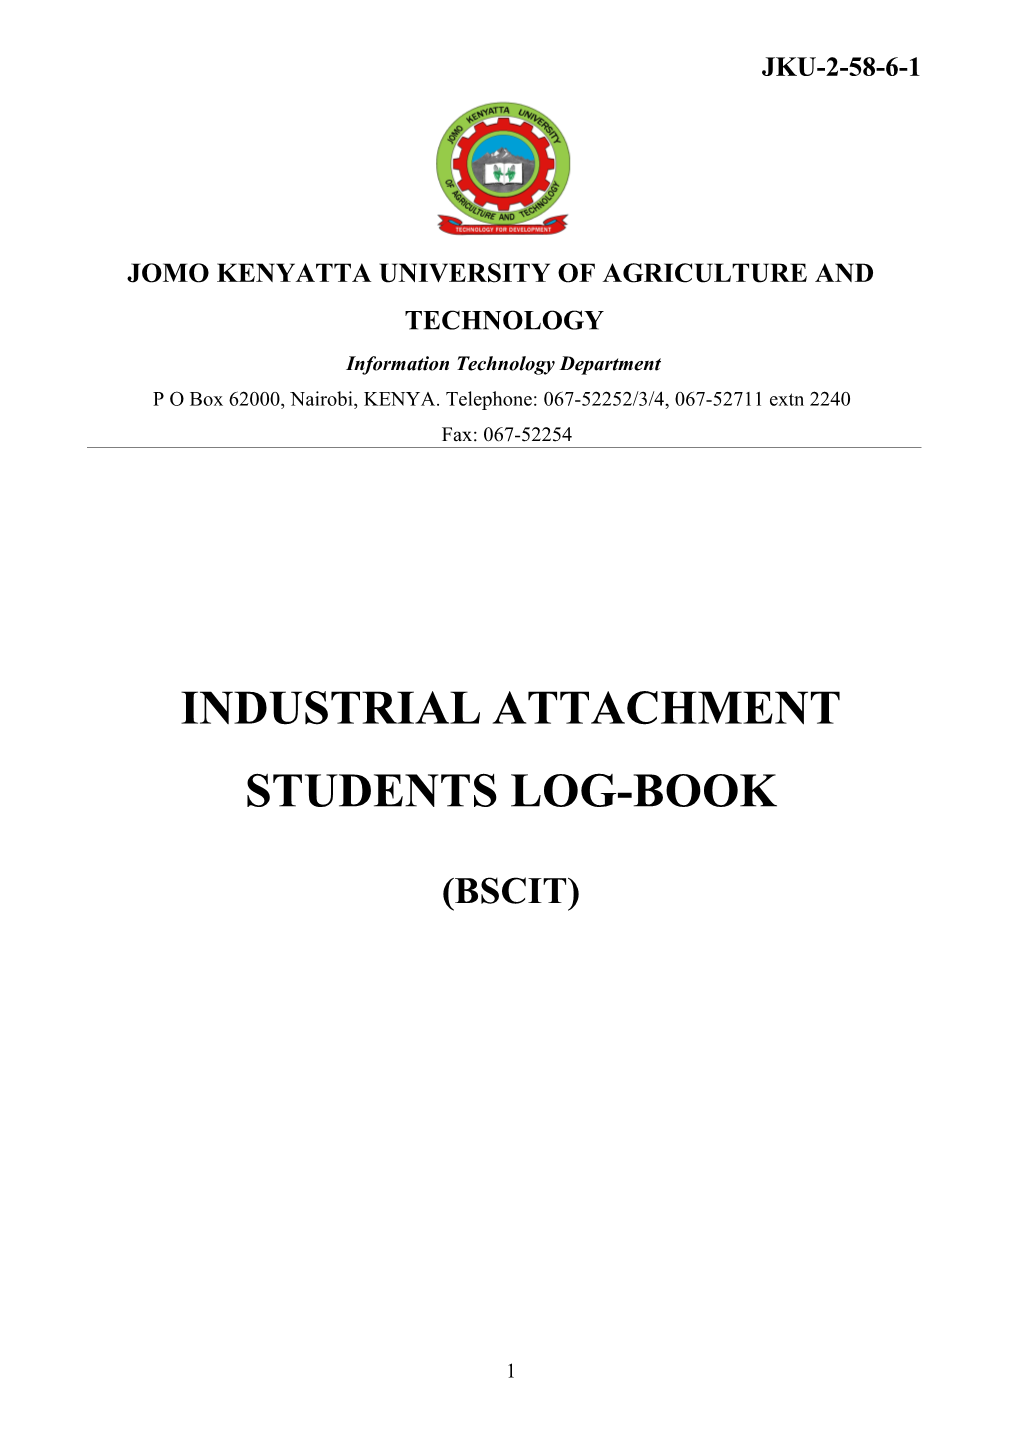 Jomo Kenyatta University of Agriculture And